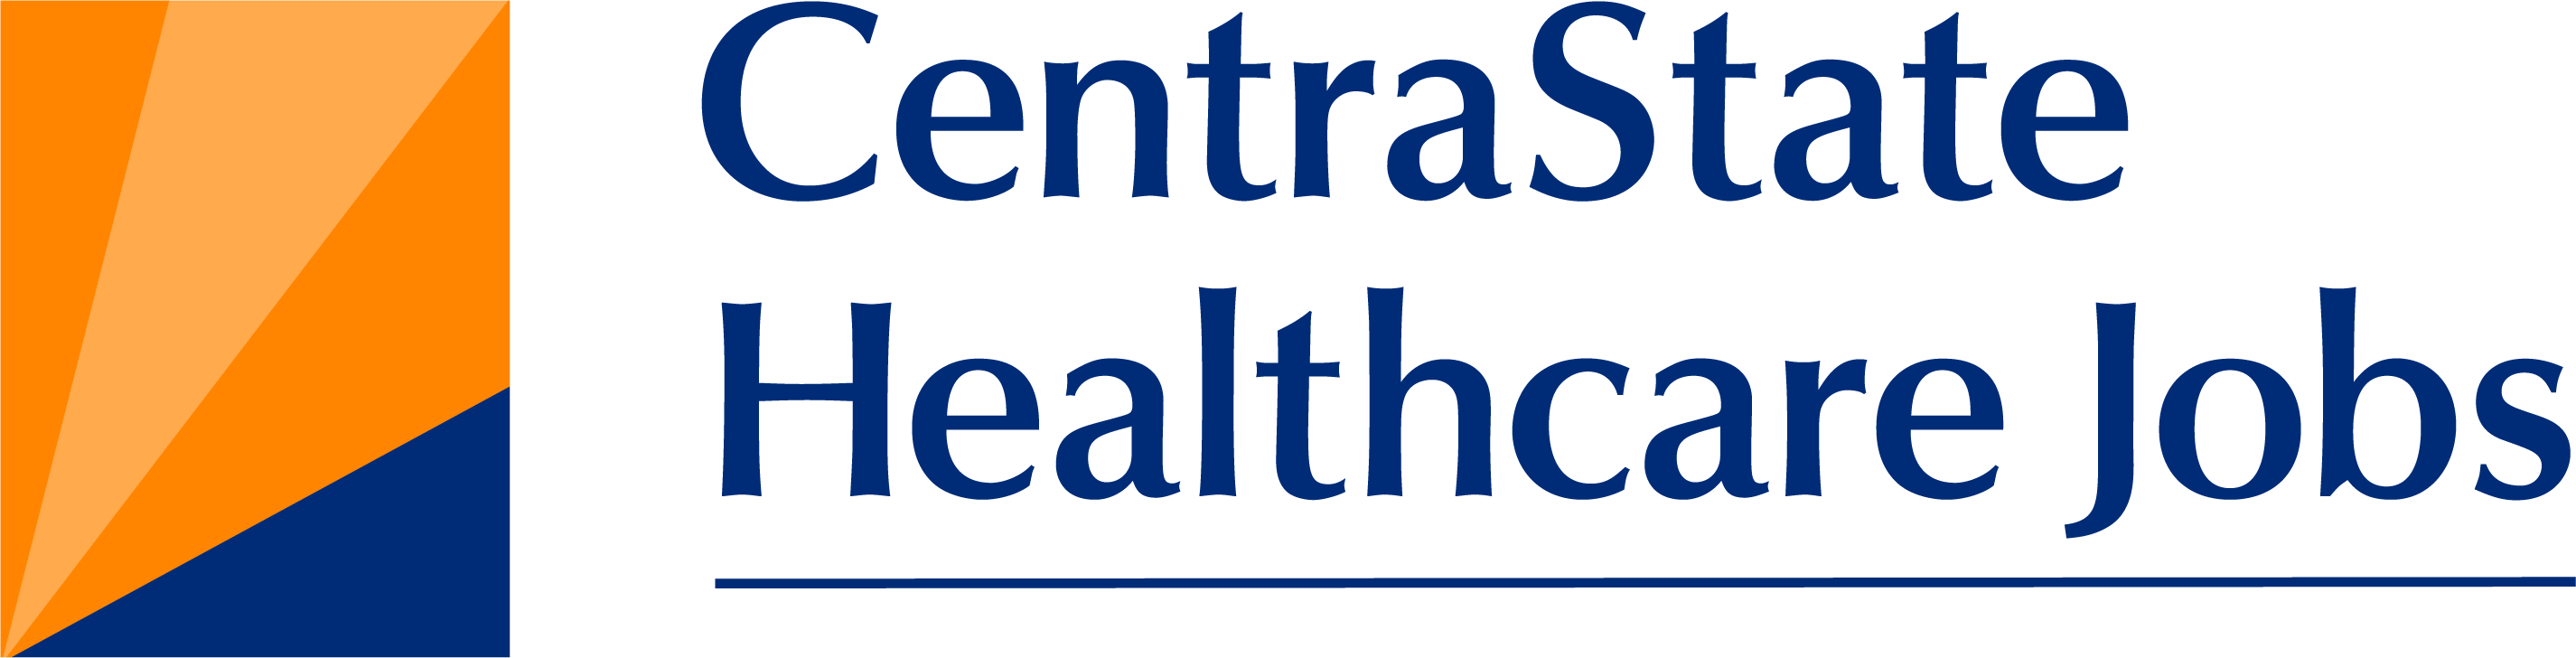 CentraState Healthcare Jobs Logo